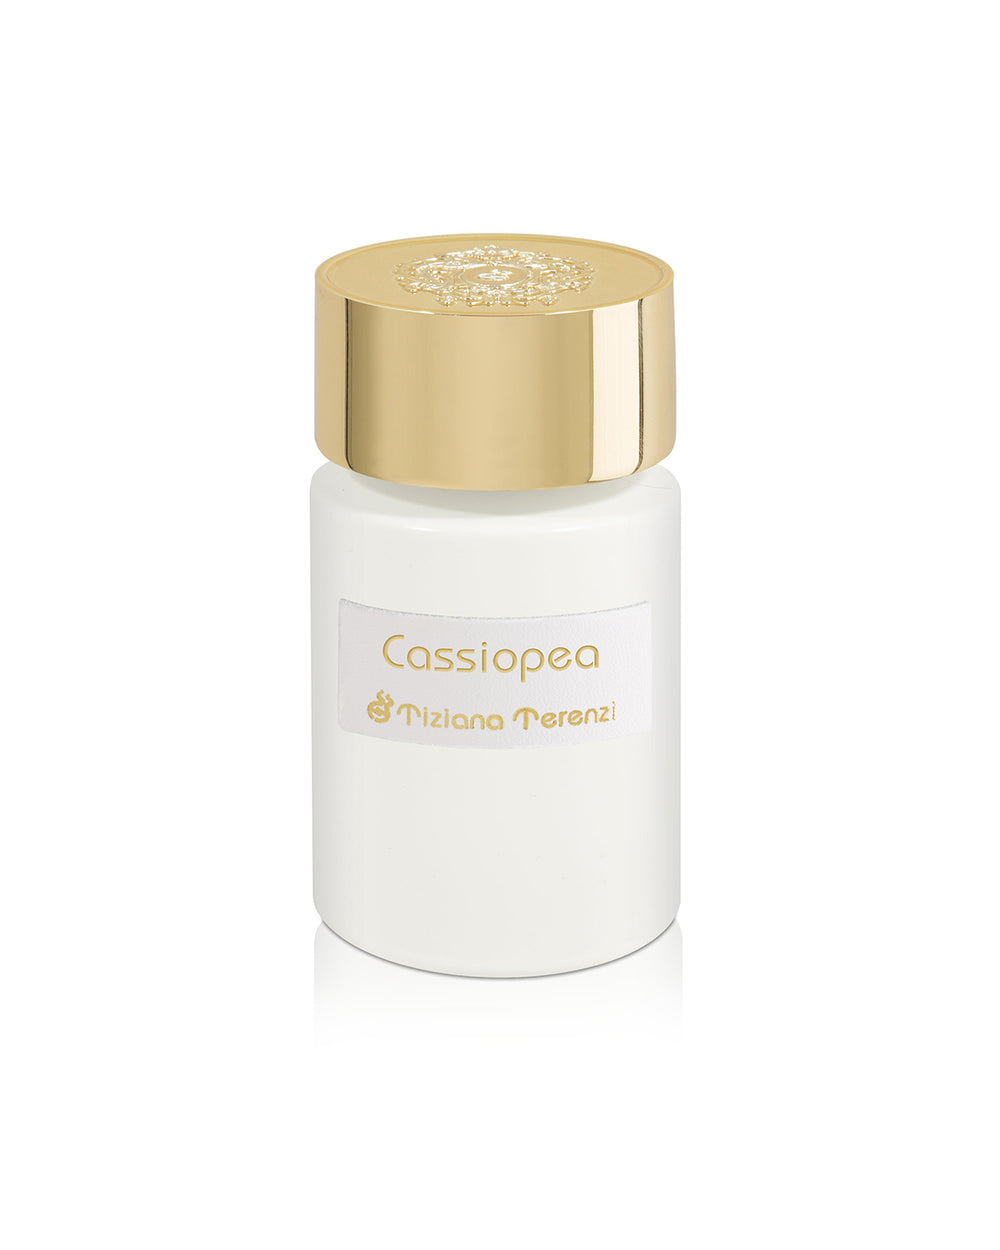 Tiziana Terenzi Cassiopea Hair Therapy Perfume Mist